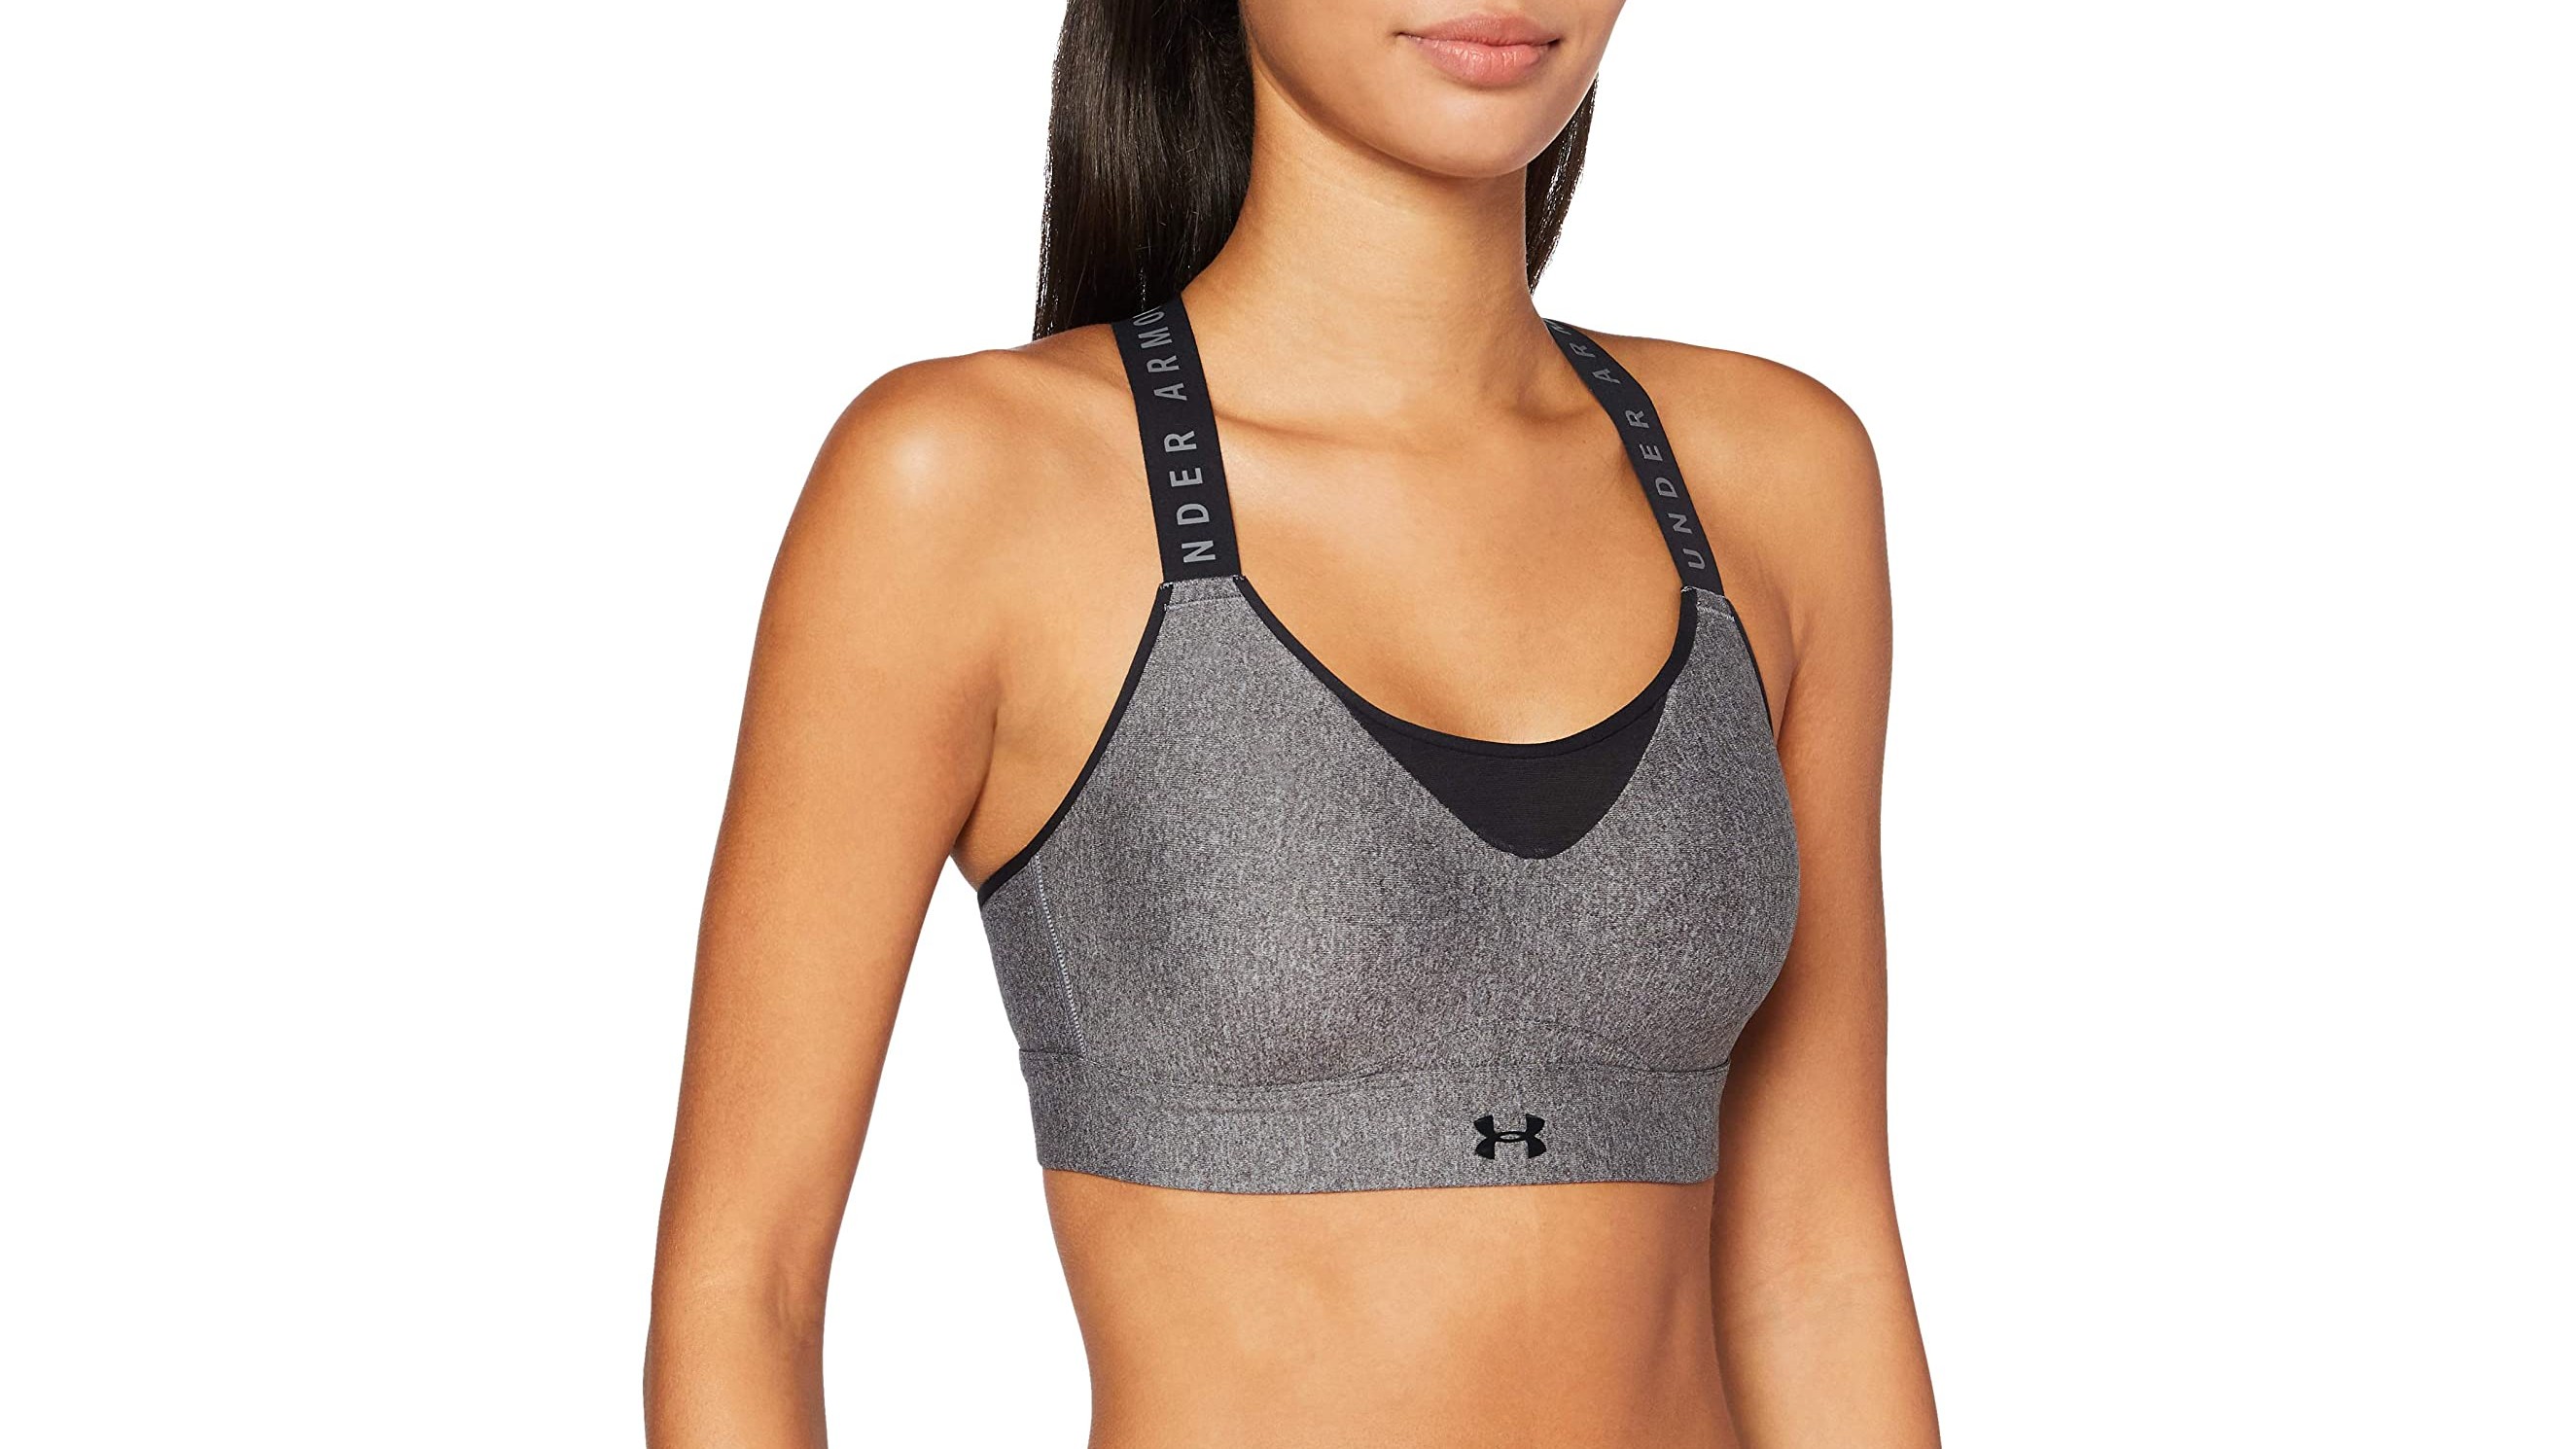 Model wearing Under Armor Infinity High sports bra